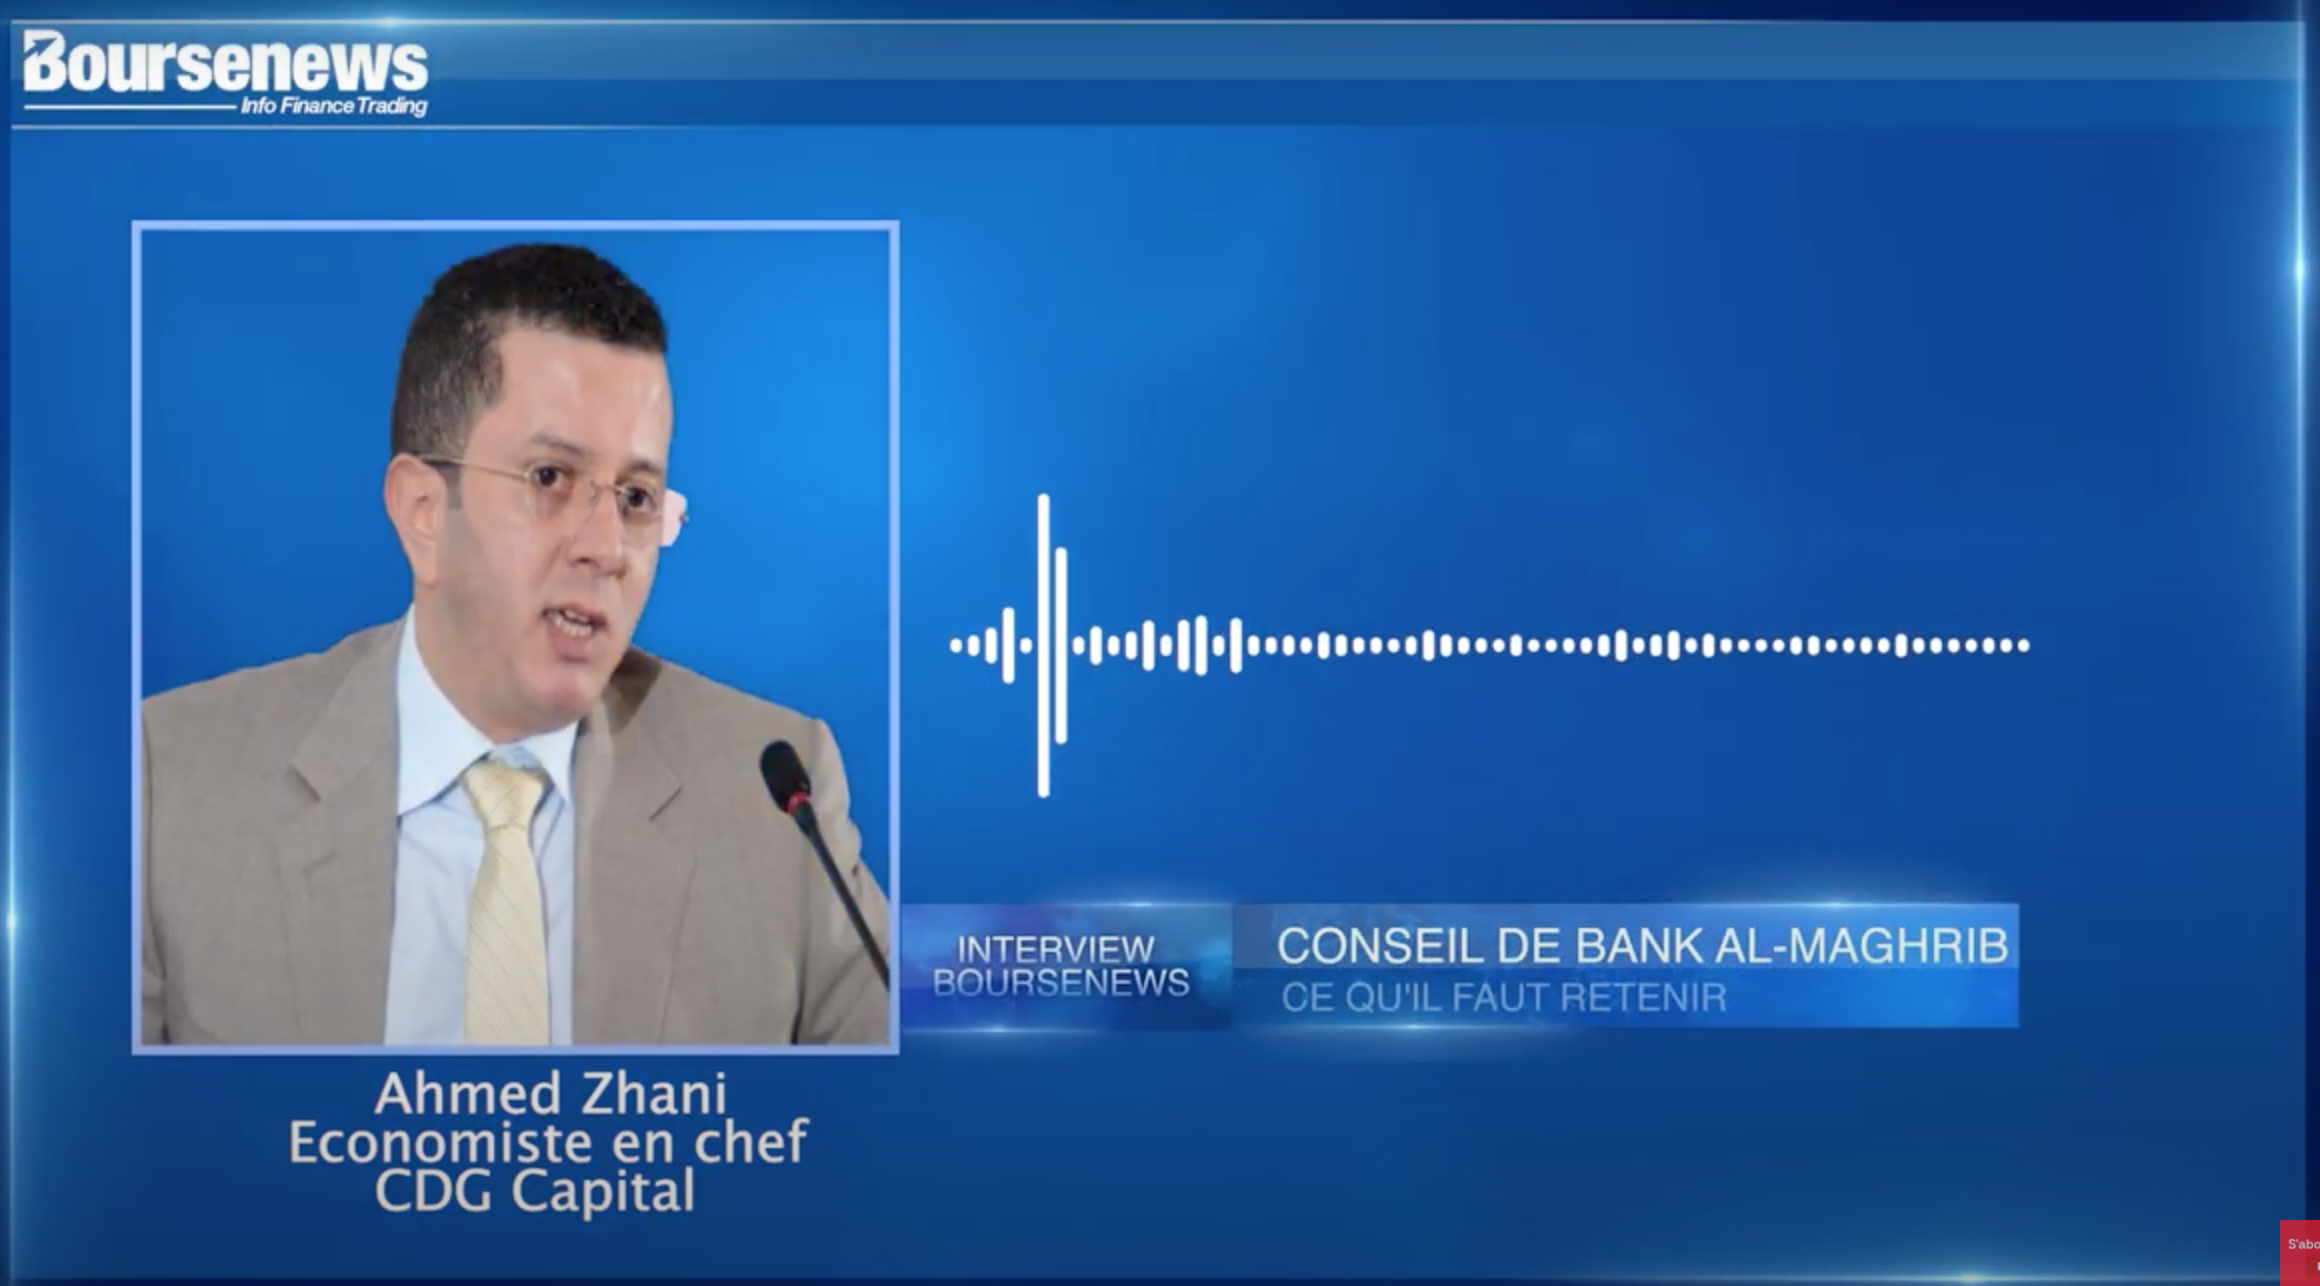 Conseil de Bank Al-Maghrib: les commentaires de Ahmed Zhani (CDG Capital)